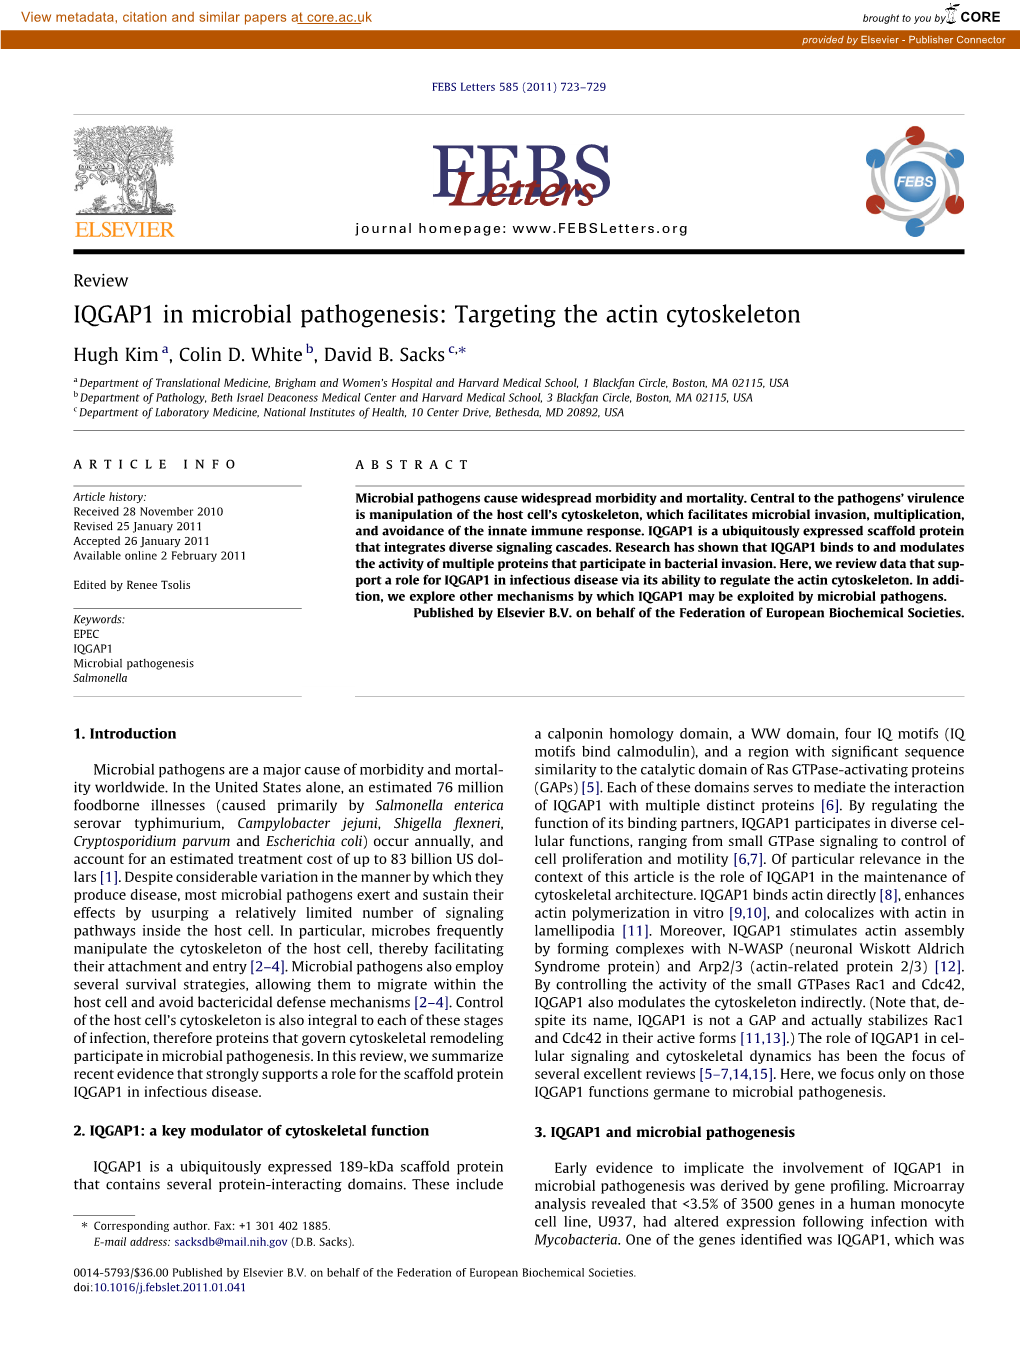 IQGAP1 in Microbial Pathogenesis: Targeting the Actin Cytoskeleton ⇑ Hugh Kim A, Colin D